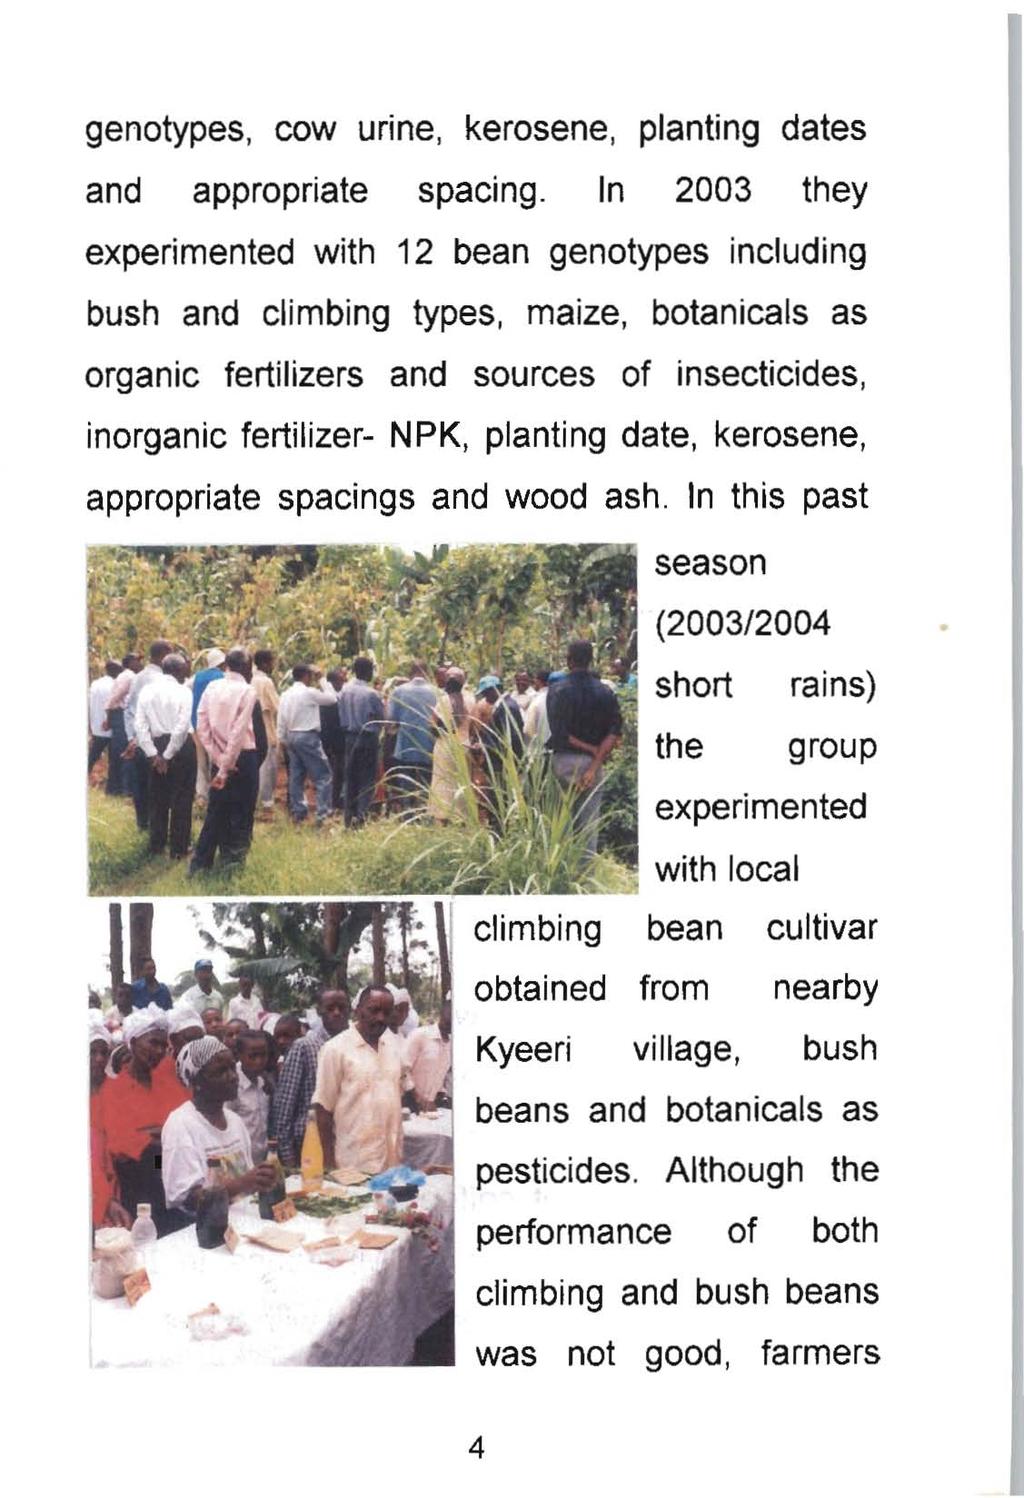 genotypes, cow urine, kerosene, planting dates and appropriate spacing.